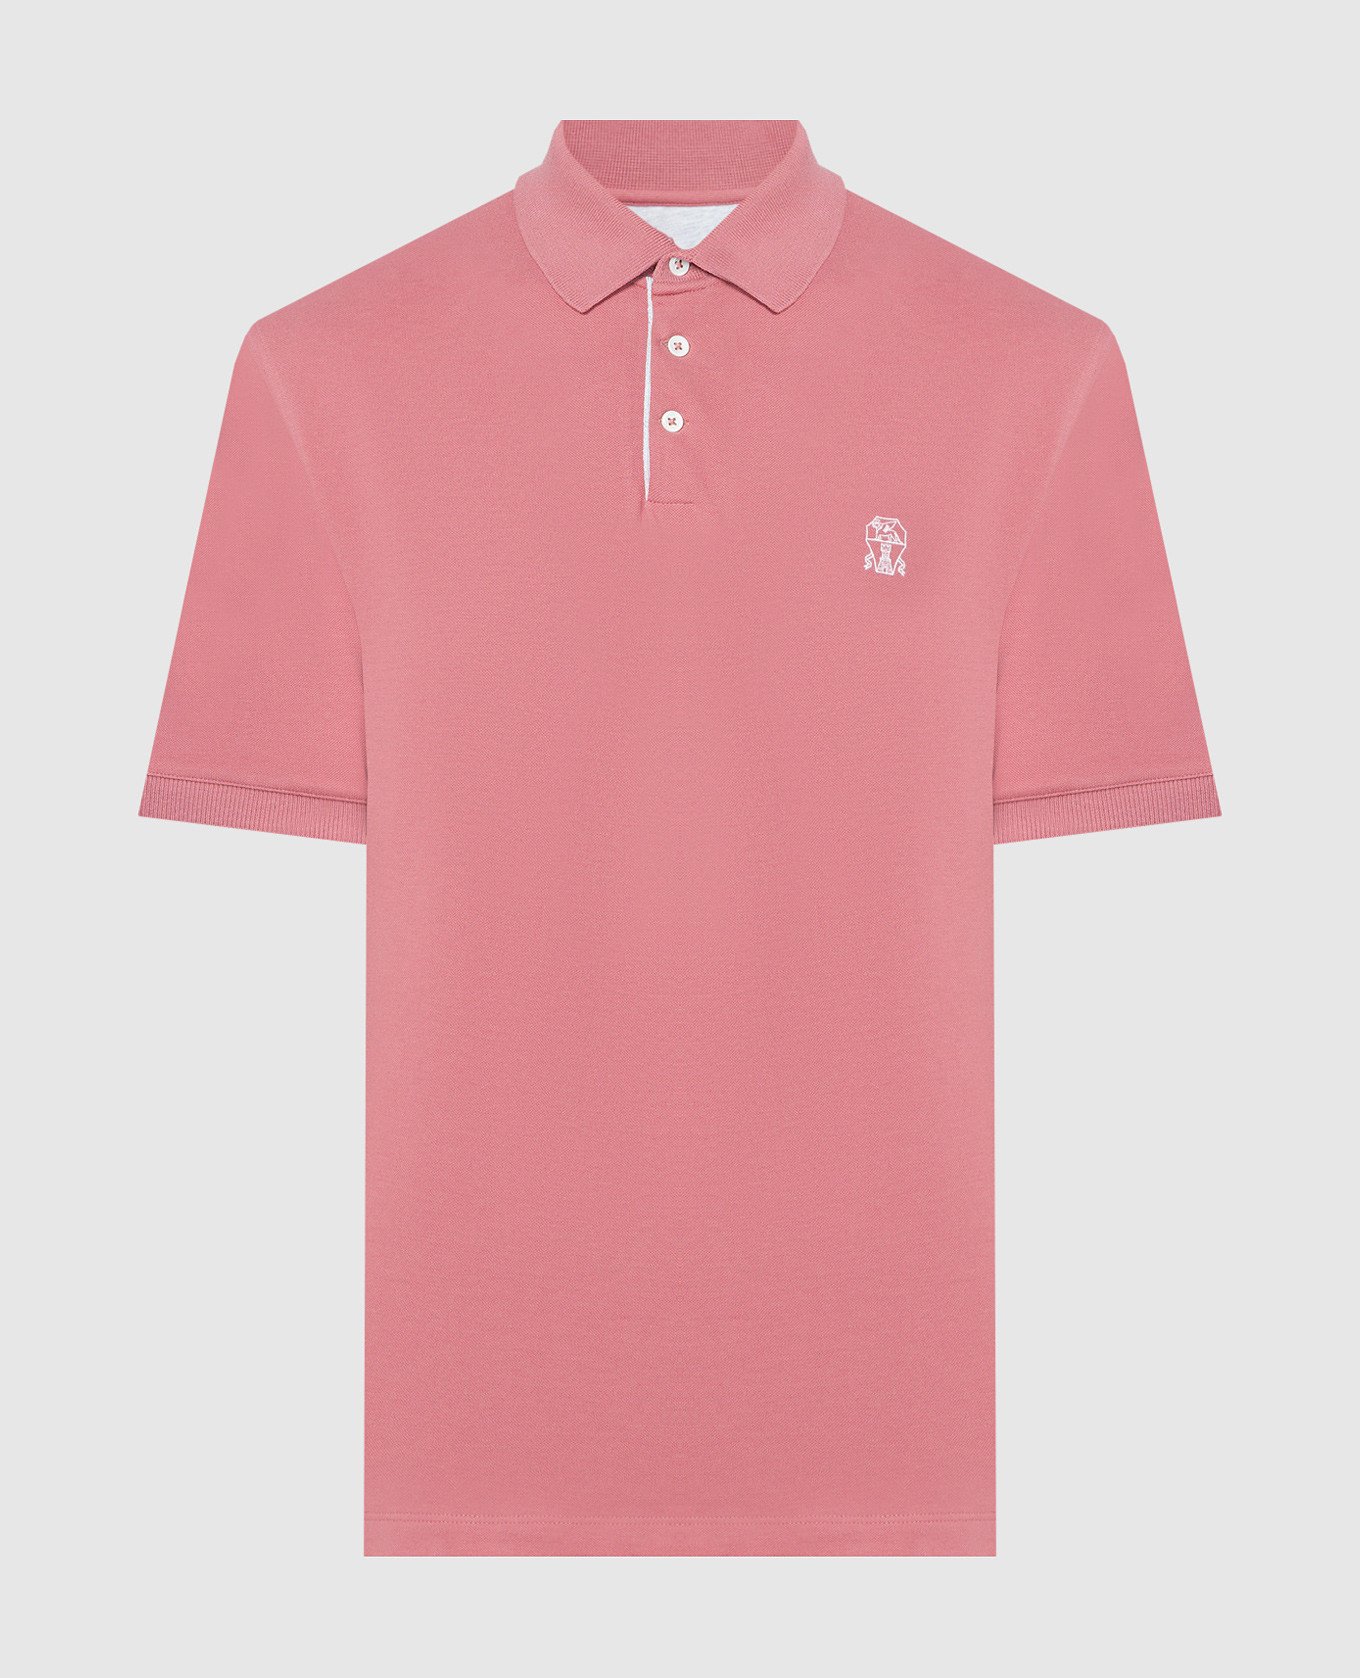 Pink polo shirt with logo emblem